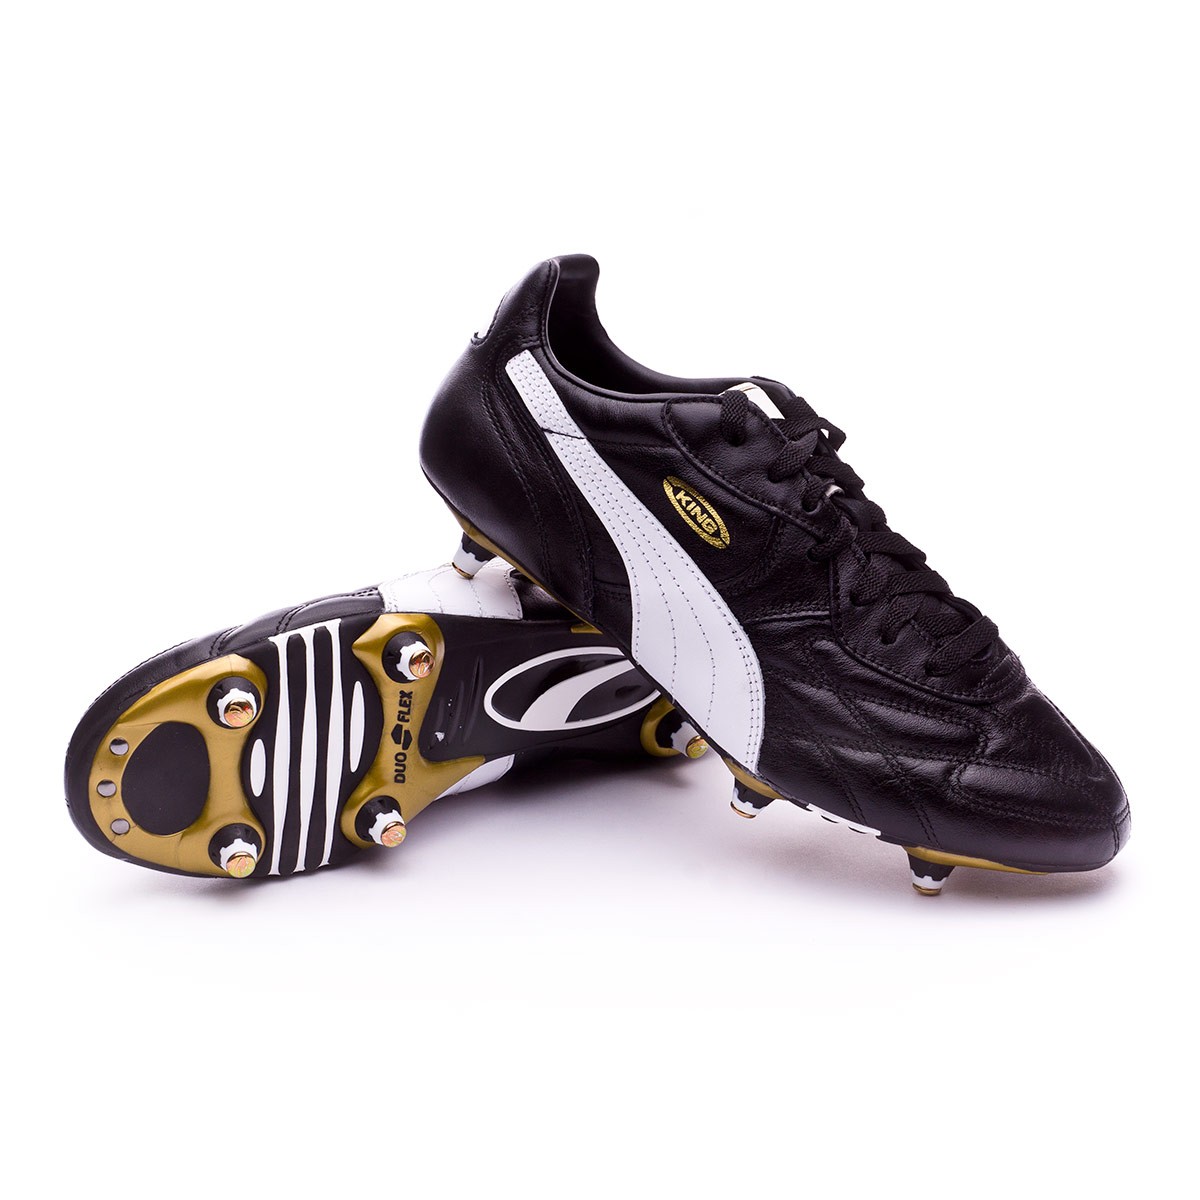 puma gold football boots